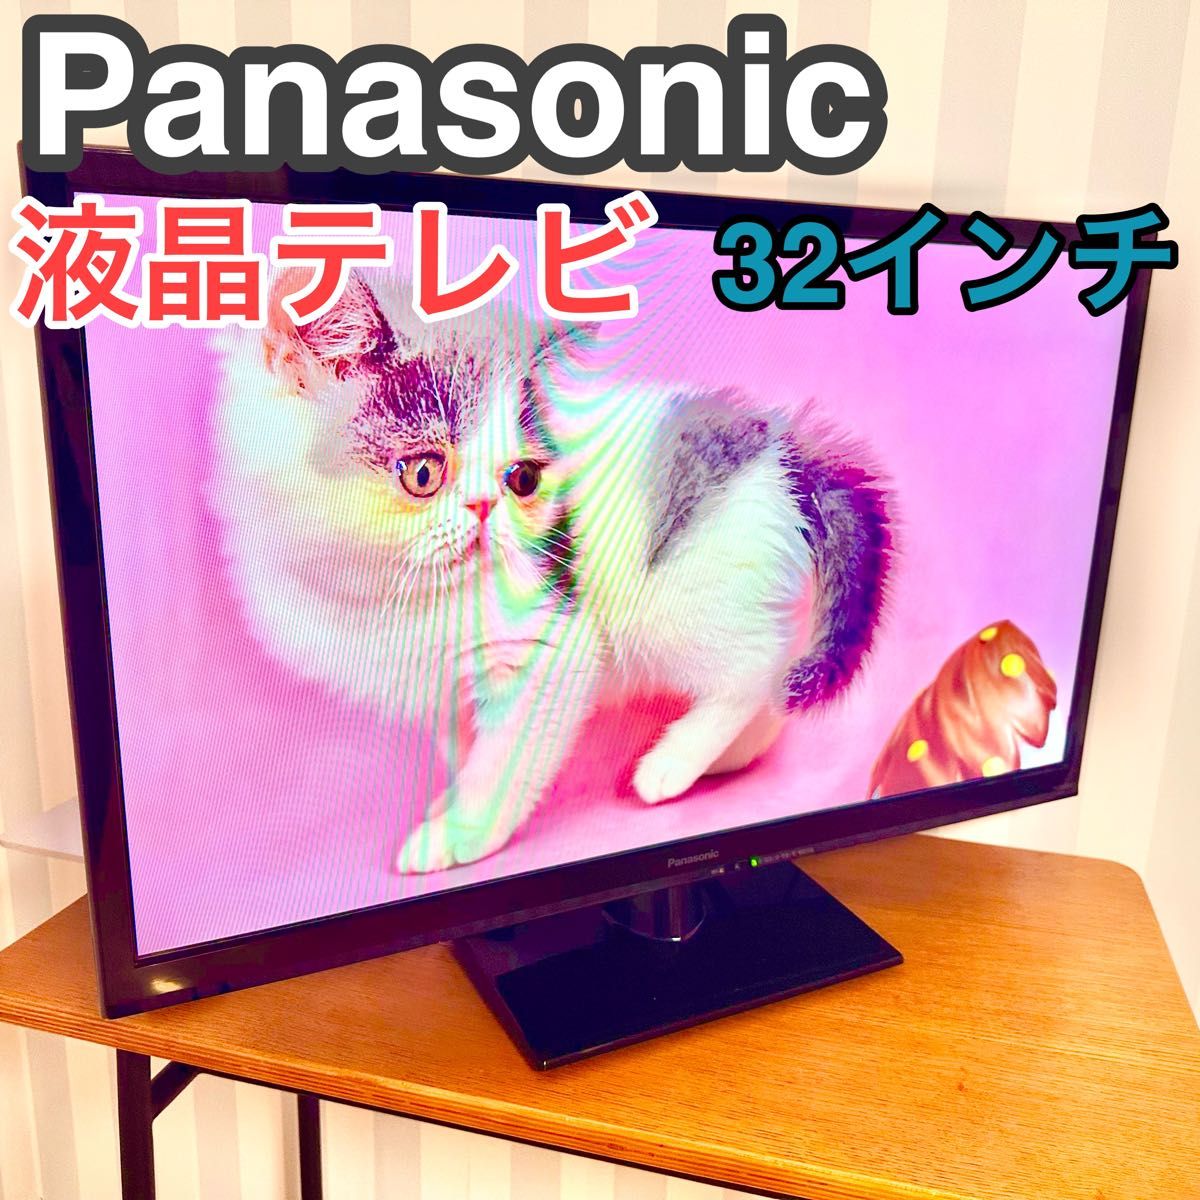 Panasonic VIERA A300 TH-32A300 液晶テレビ パナソニック VIERA ビエラ 32インチ